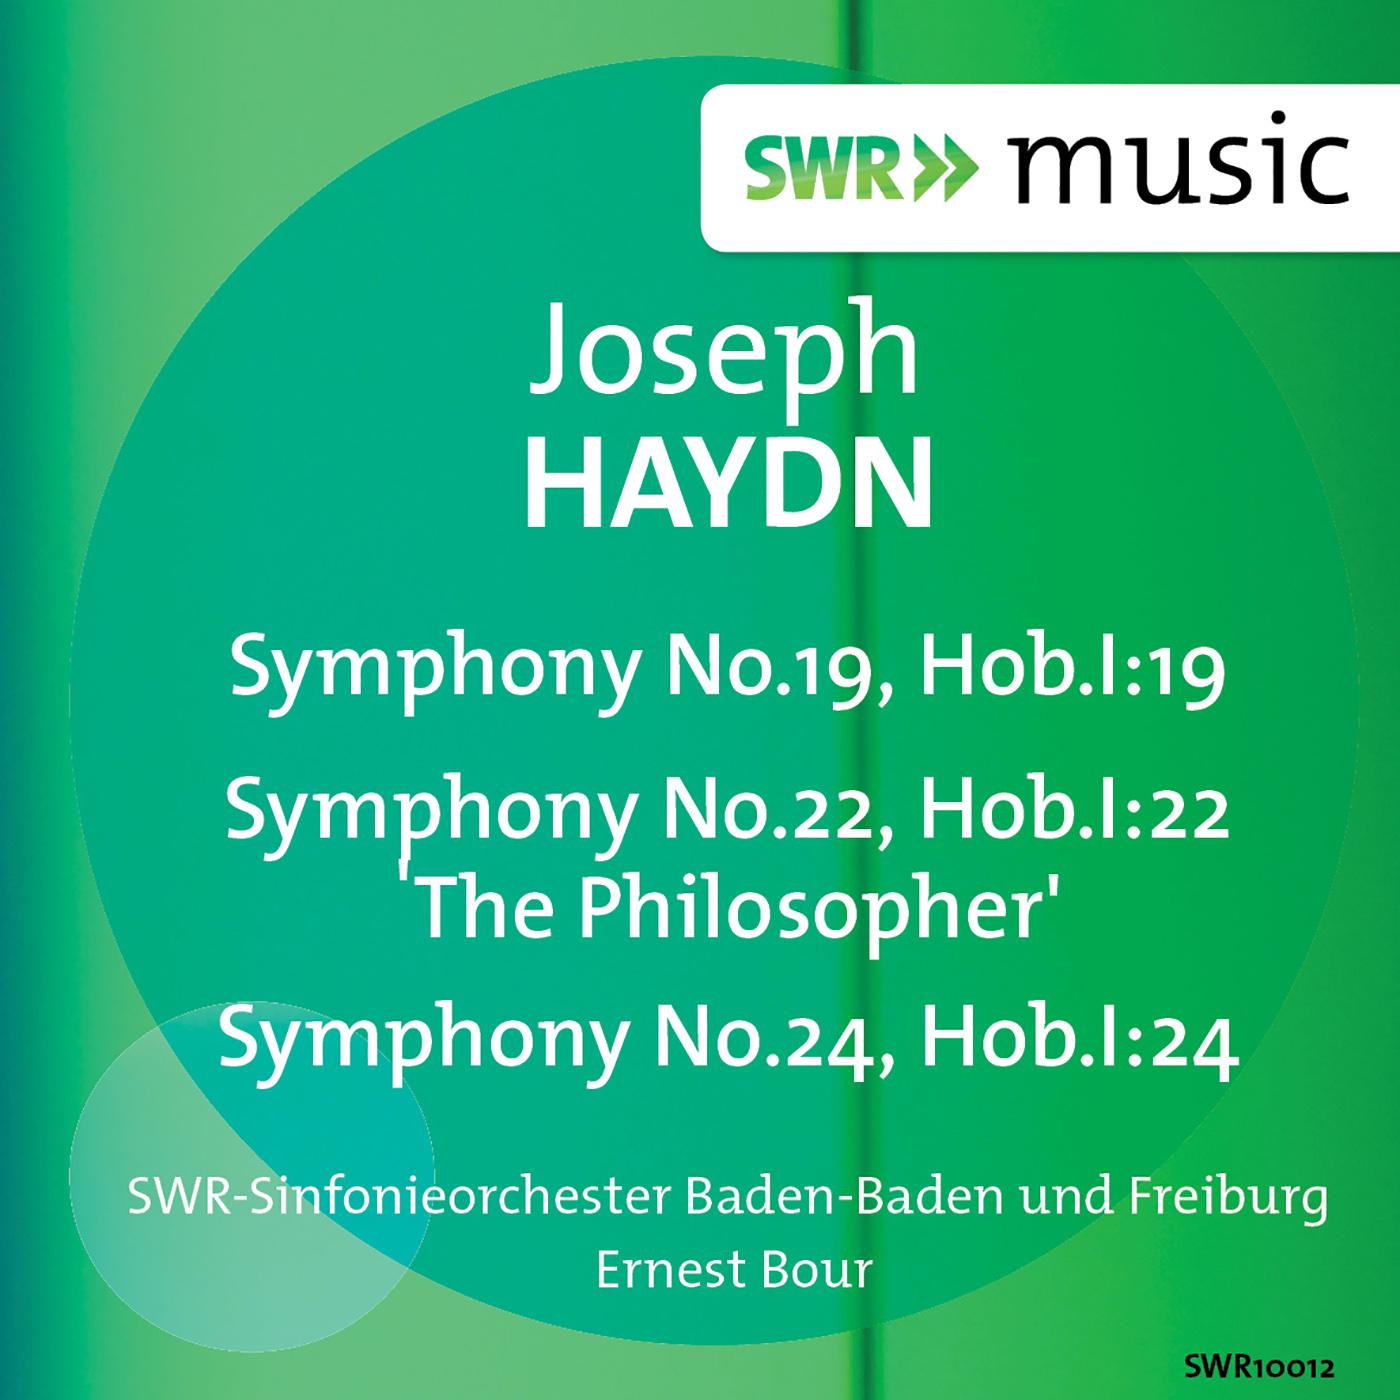 SWR Sinfonieorchester Baden-Baden und Freiburg - Symphony No. 22 in E-Flat Major, Hob.I:22, 